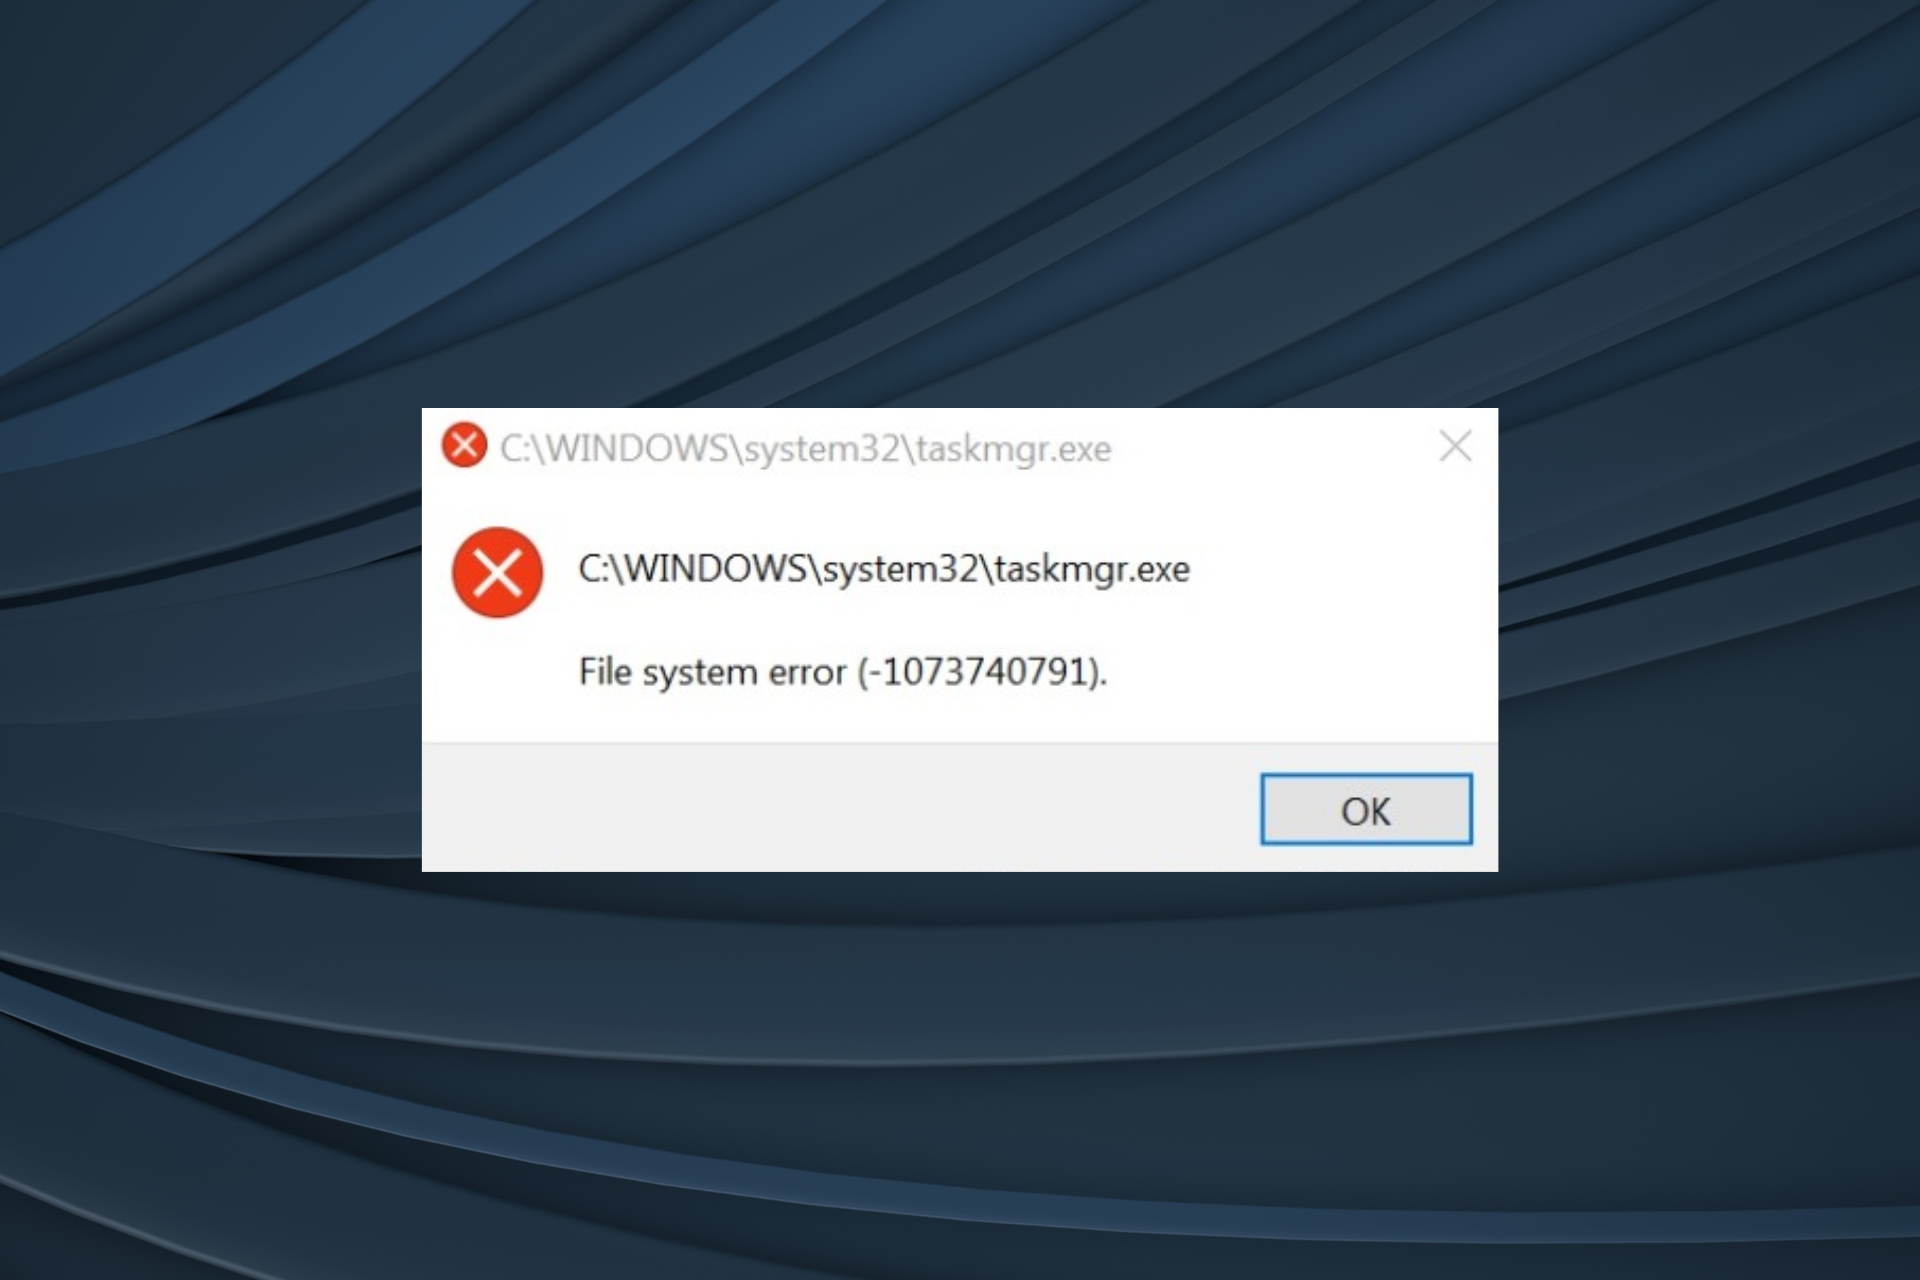 fix file system error (-1073740791) in Windows